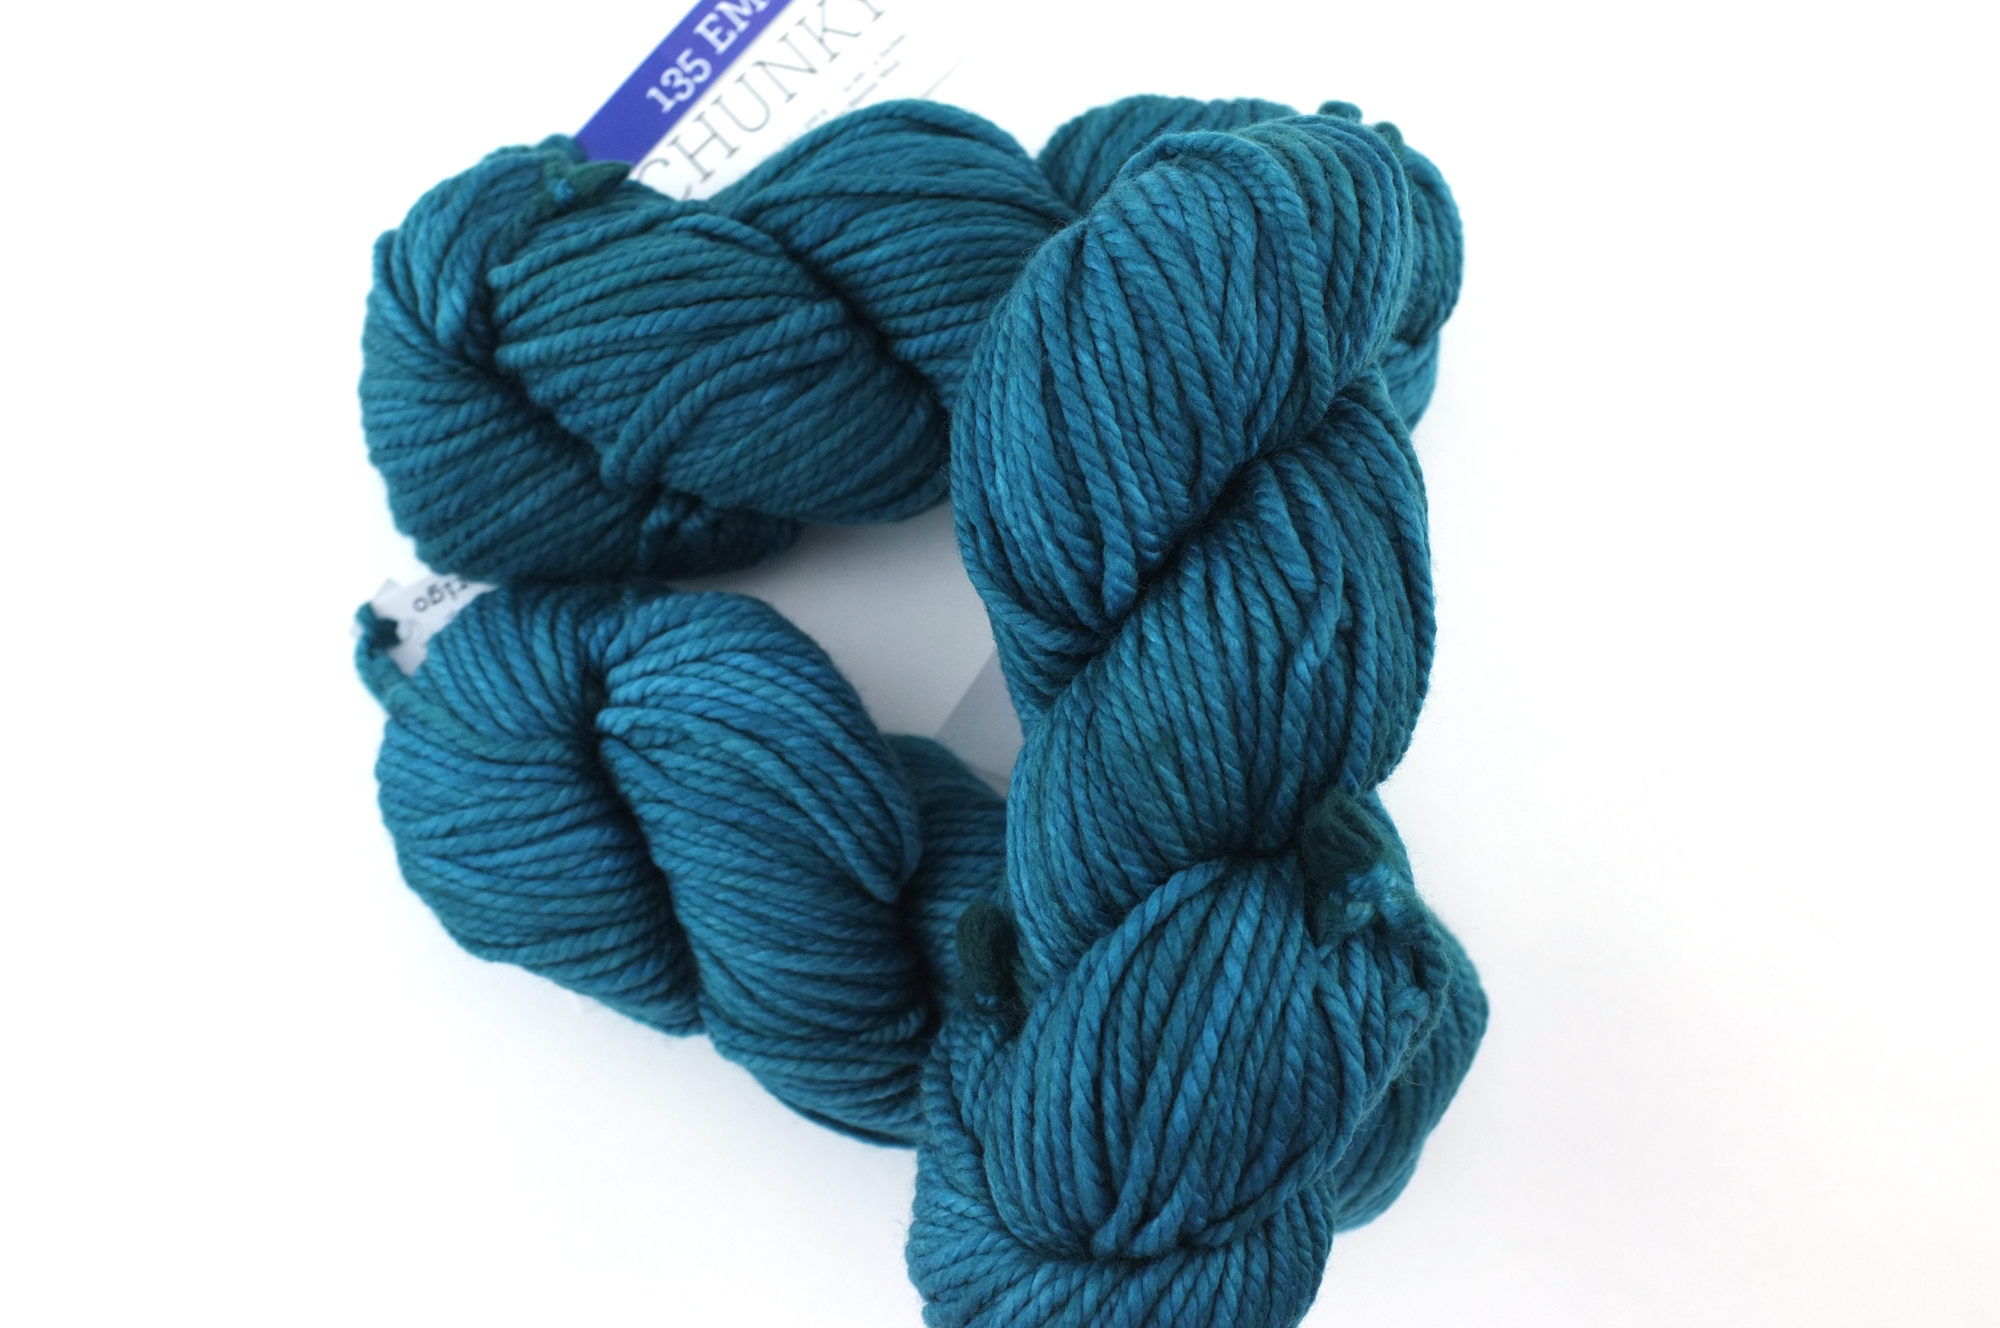 Malabrigo Chunky in color VAA, Bulky Weight Merino Wool Knitting Yarn, dark  green medley, #051 Red Beauty Textiles